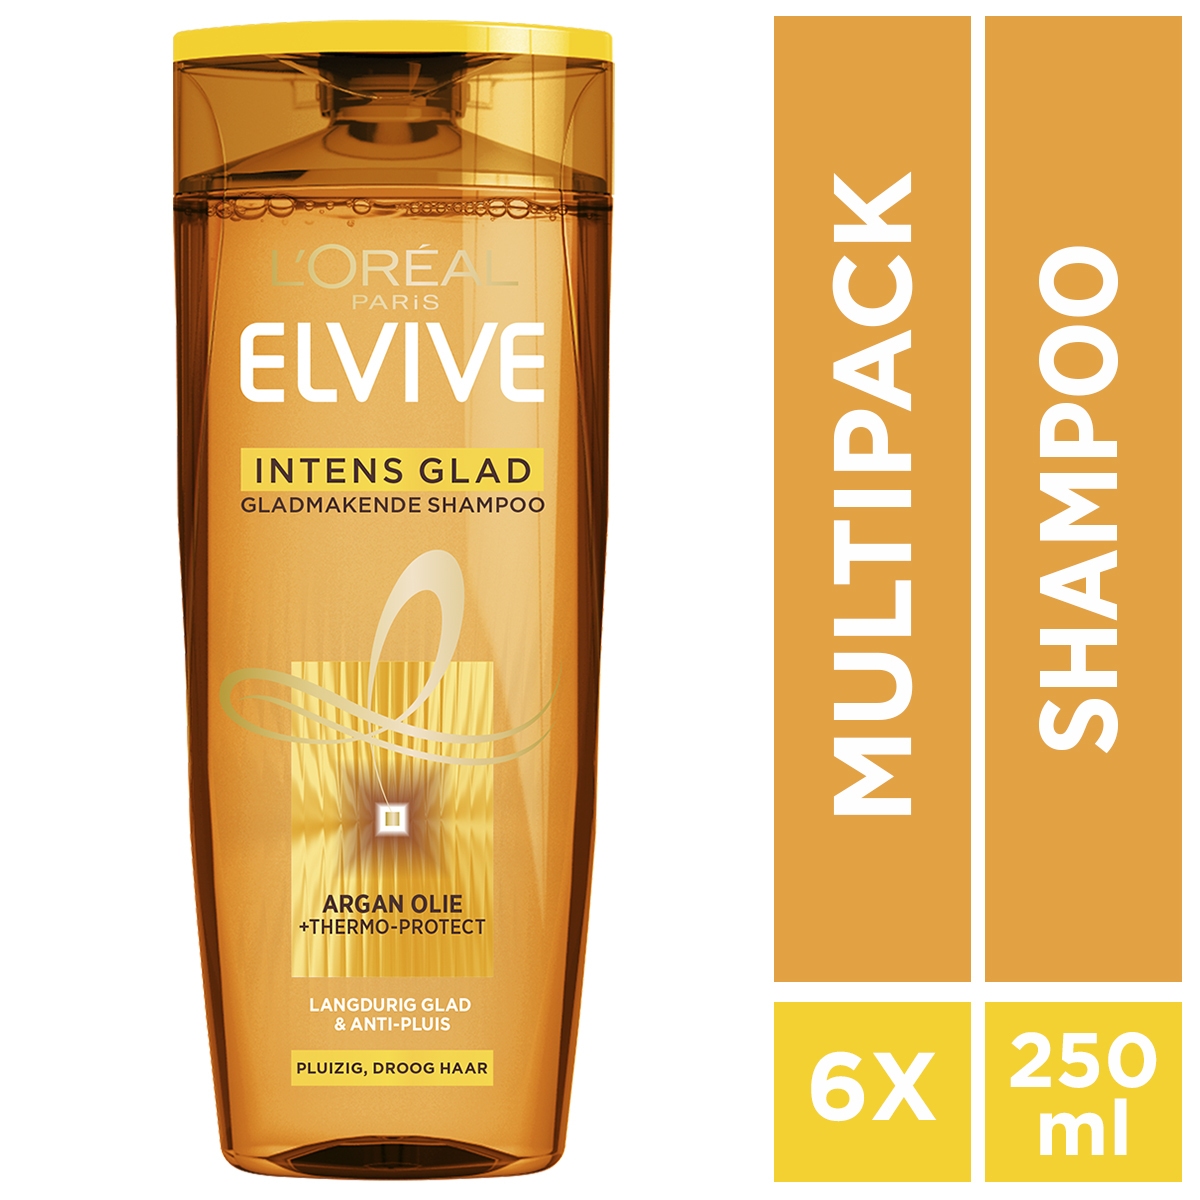 L'Oréal Elvive Intens Glad - 6x 250 ml - Shampoo